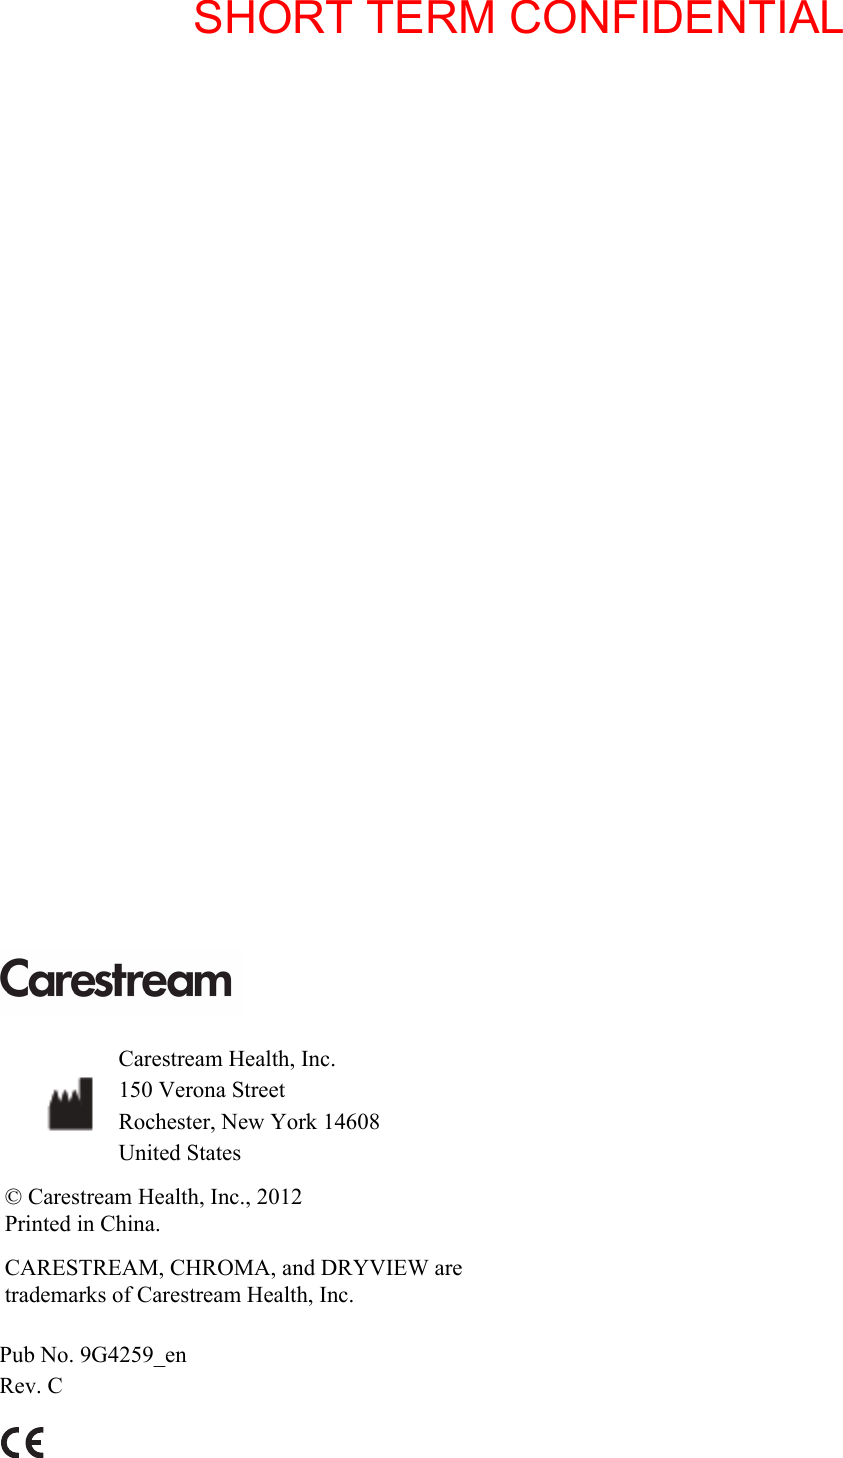 Pub No. 9G4259_enRev. CCarestream Health, Inc.150 Verona StreetRochester, New York 14608United States© Carestream Health, Inc., 2012Printed in China.CARESTREAM, CHROMA, and DRYVIEW are trademarks of Carestream Health, Inc.SHORT TERM CONFIDENTIAL